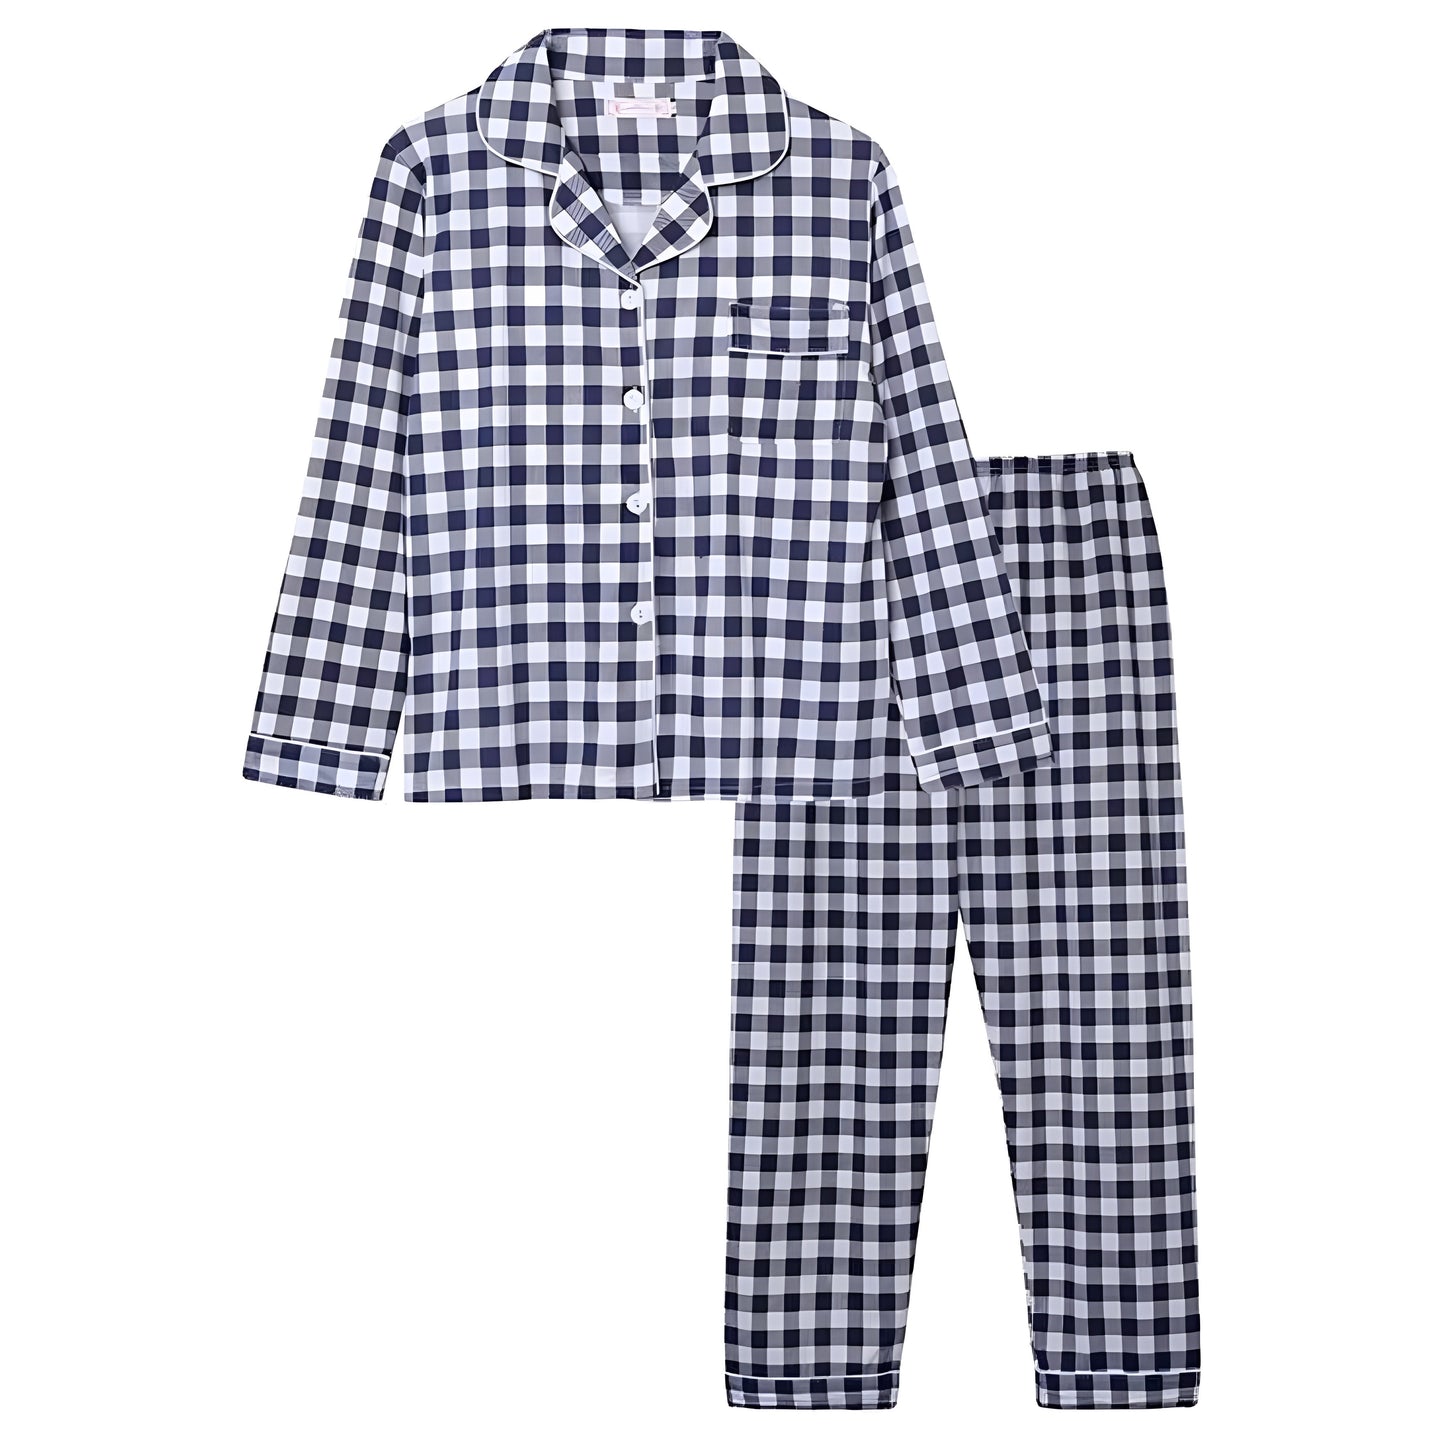 Navy Blue Checkered Pajama Set